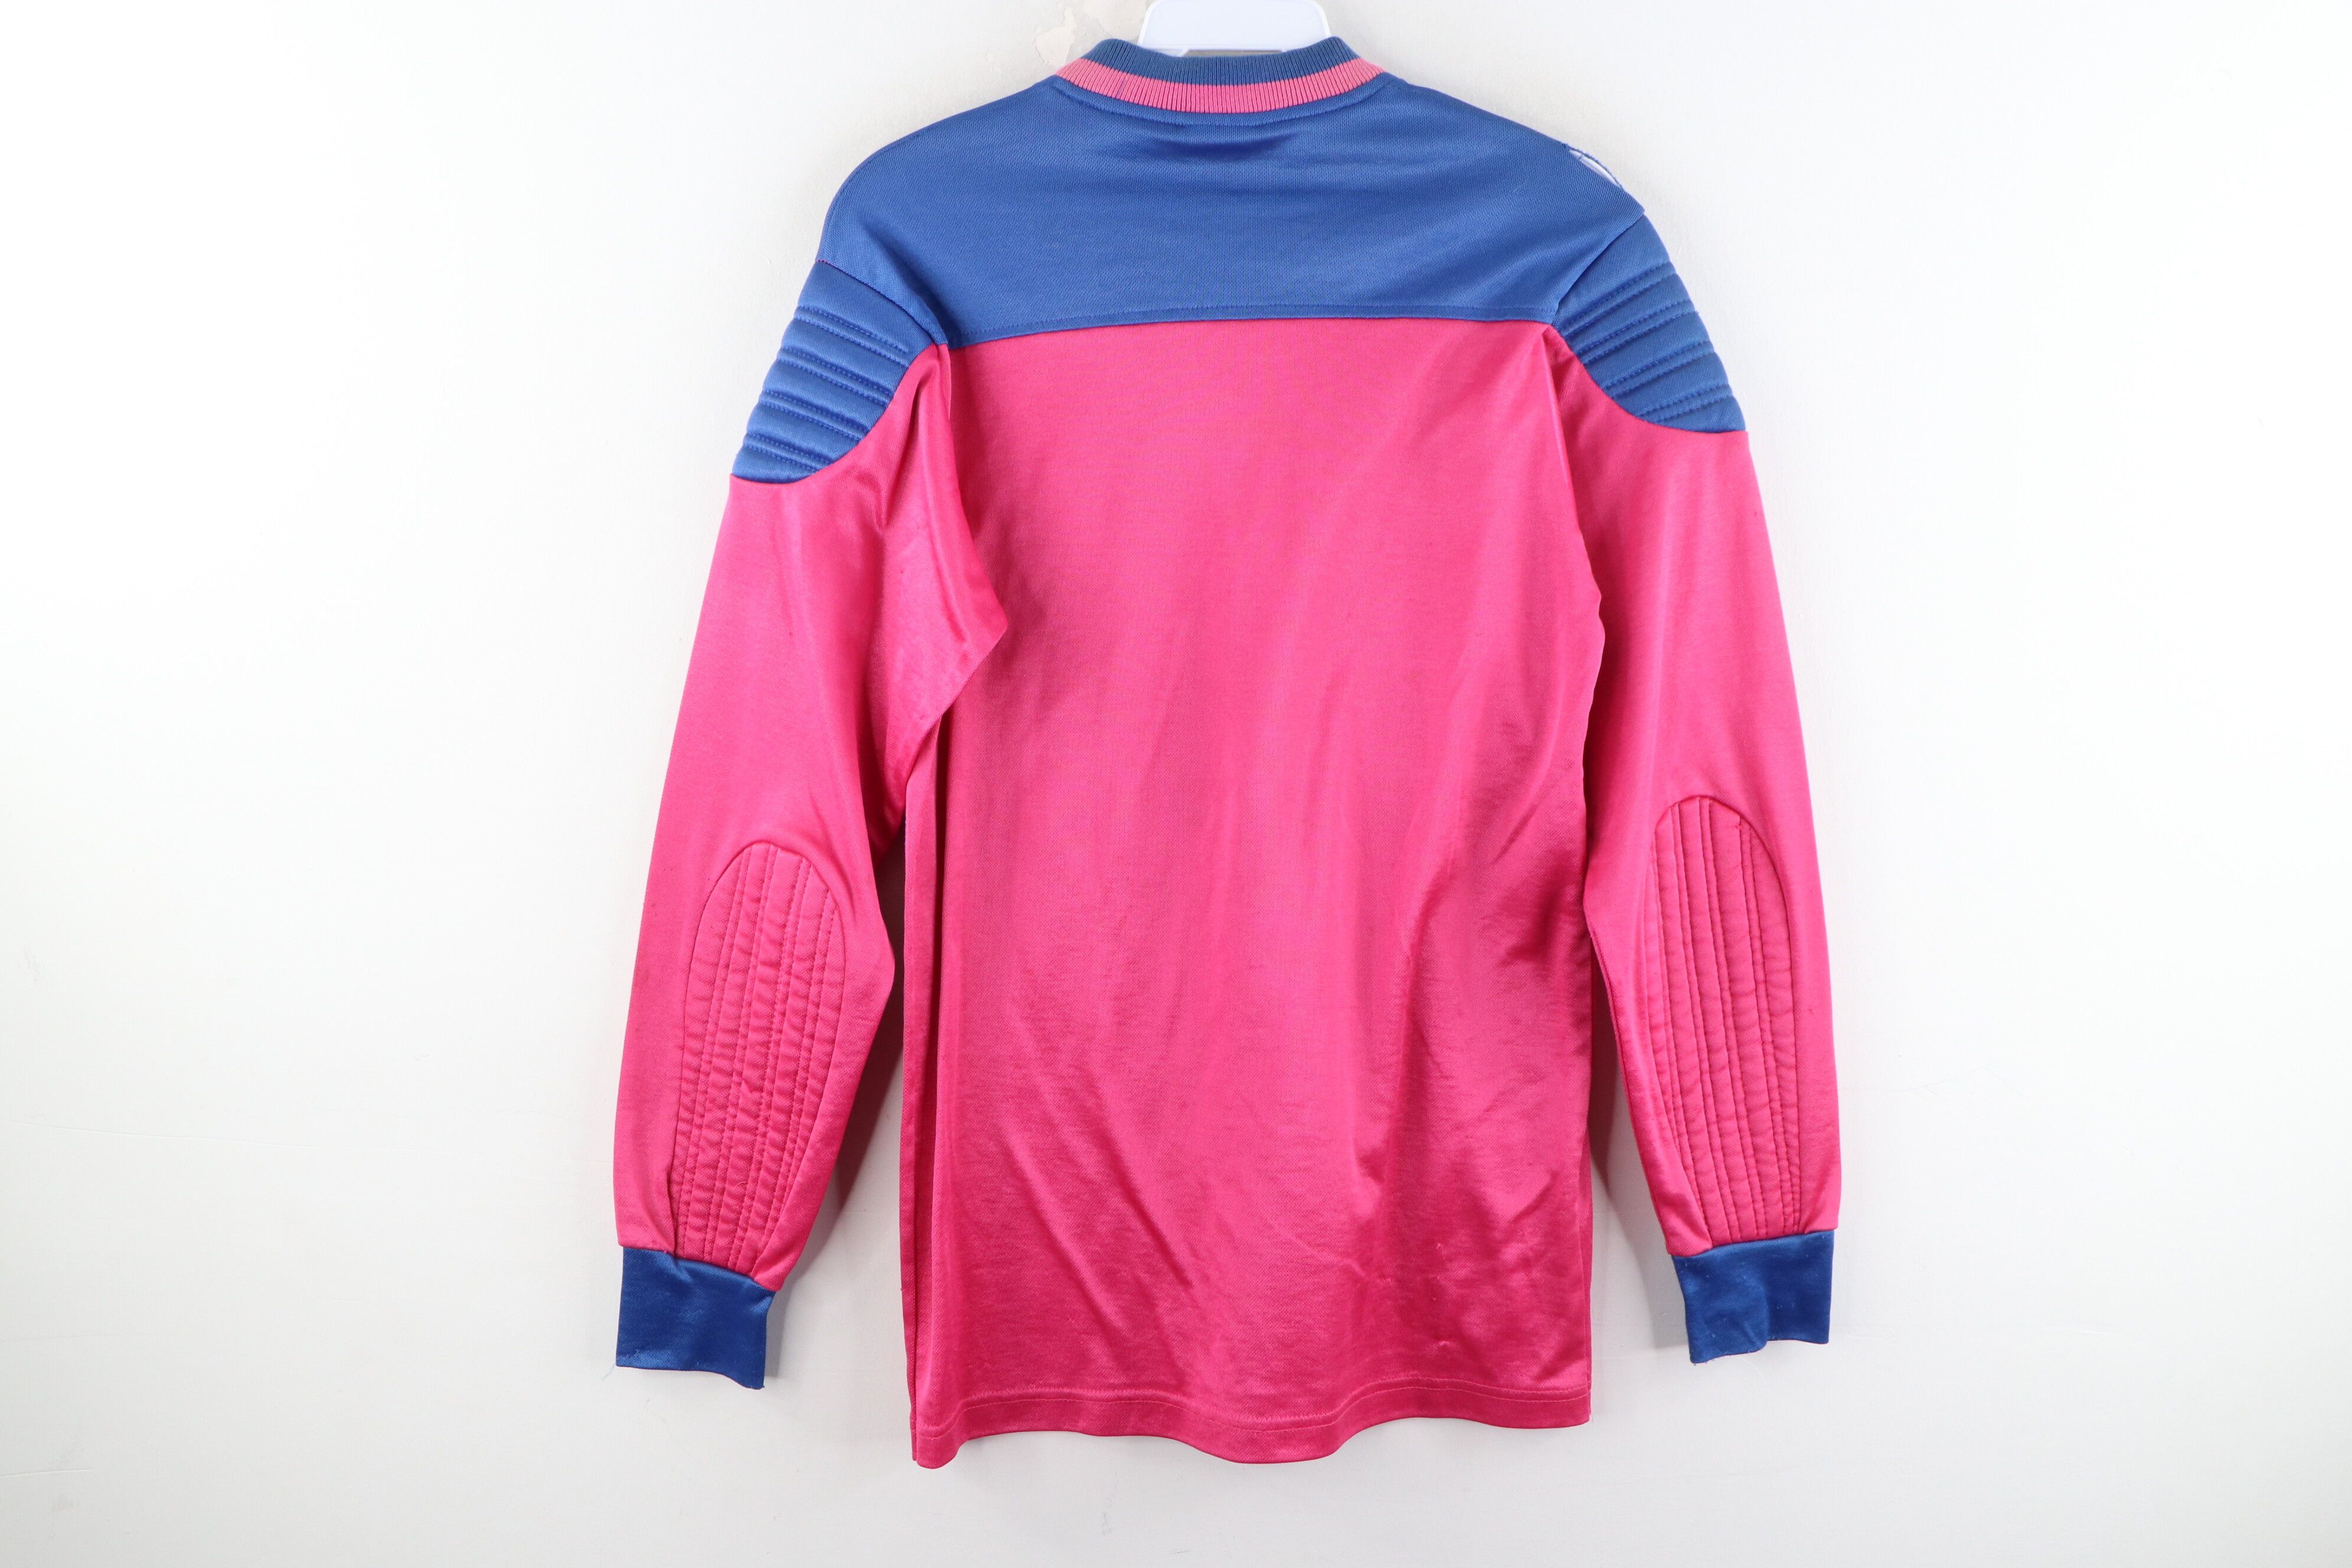 Vintage Vintage 90s Umbro Distressed Padded Goalie Jersey Pink USA Size US S / EU 44-46 / 1 - 8 Thumbnail